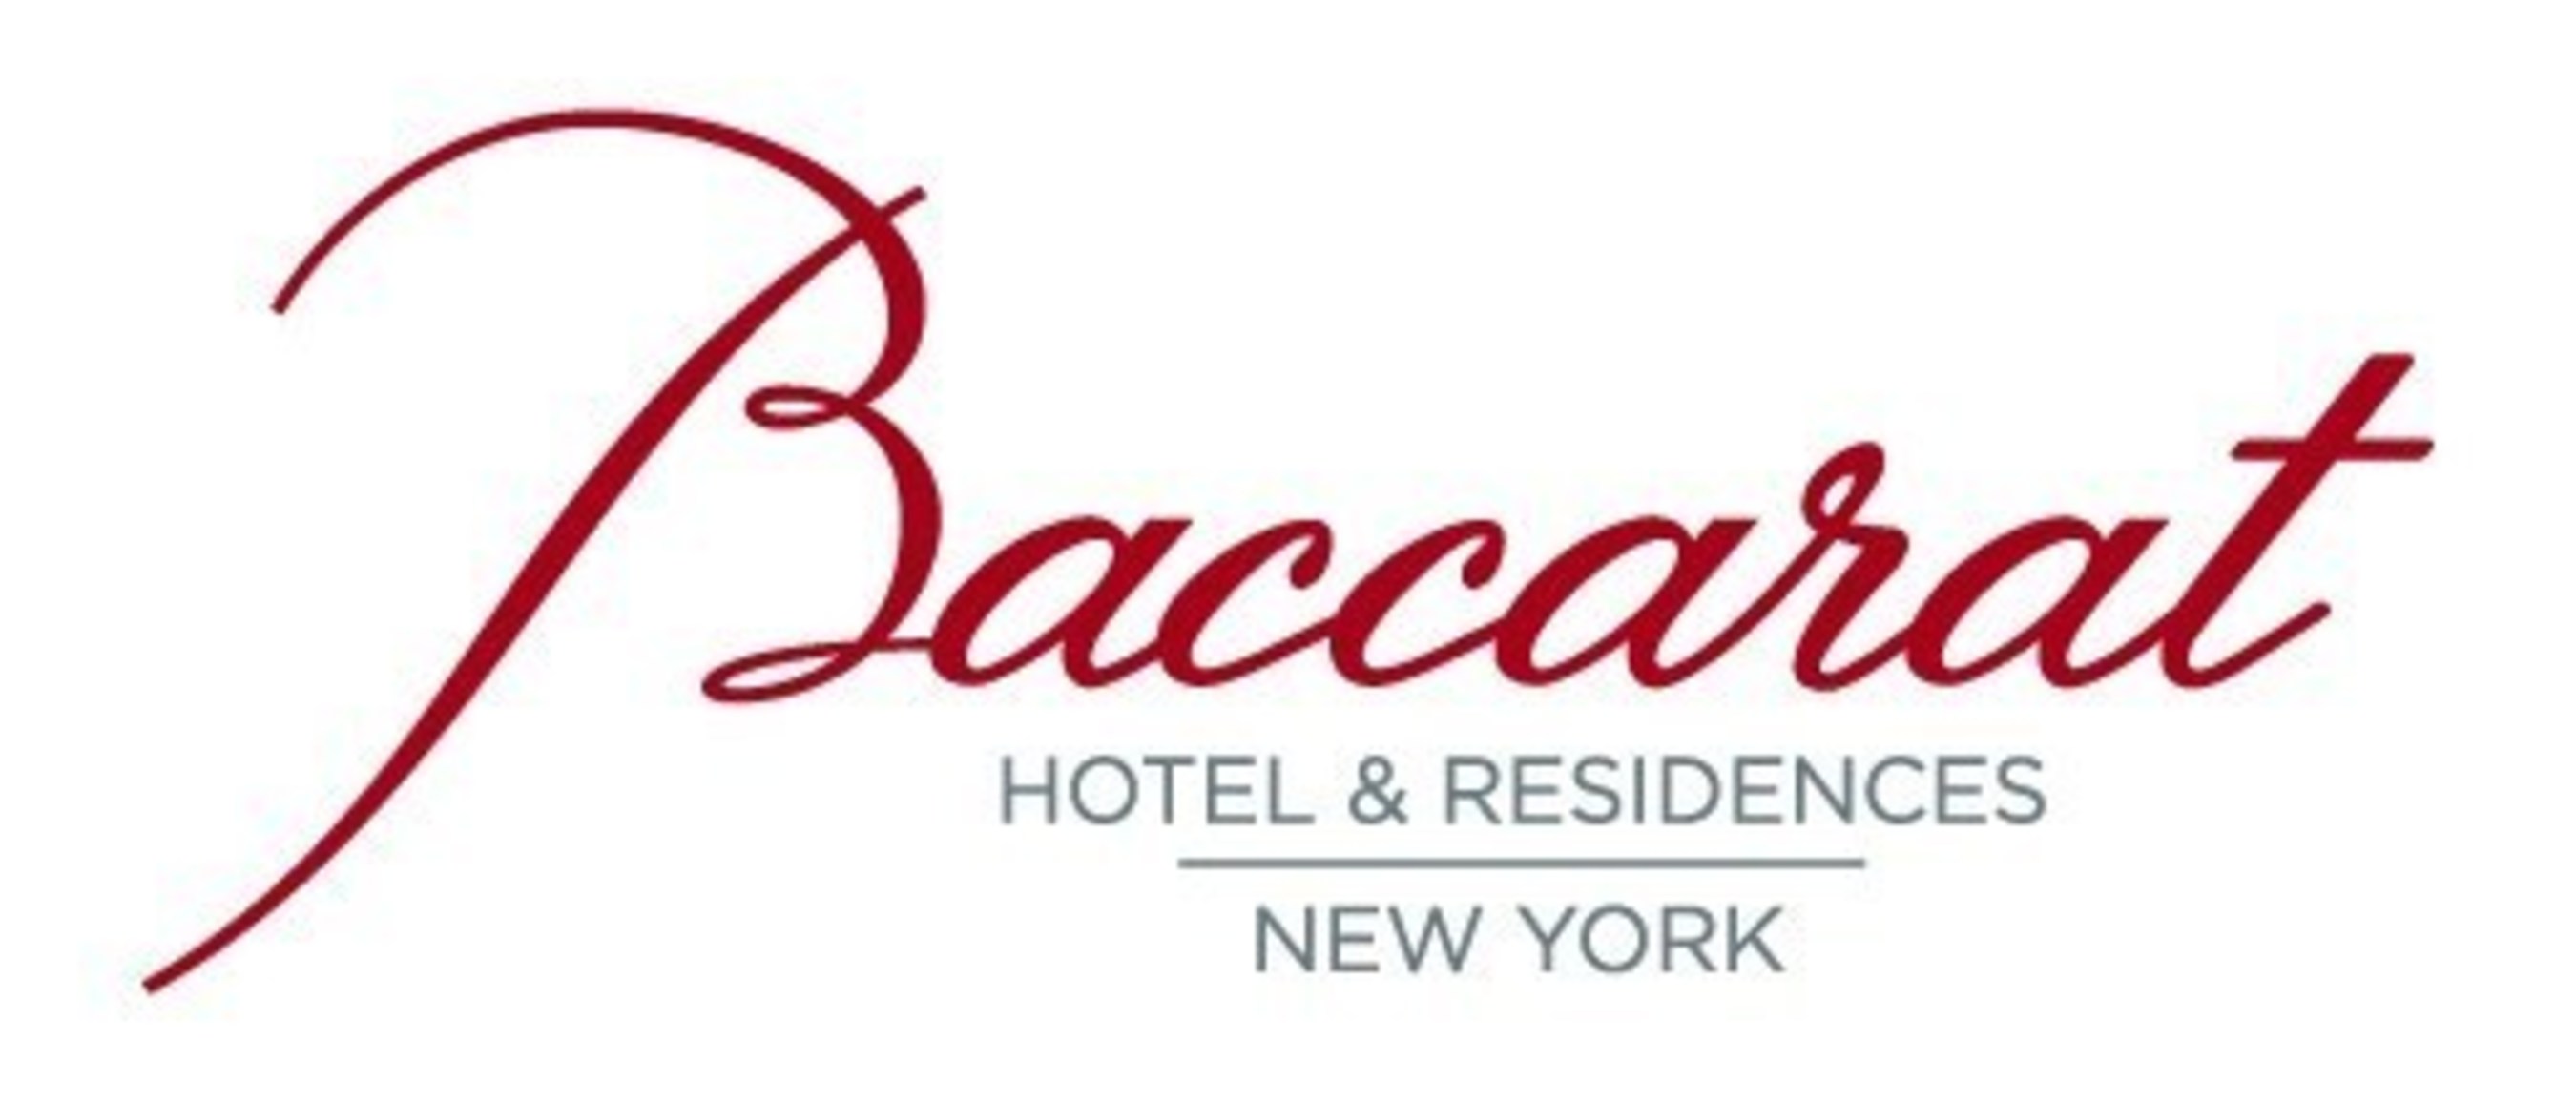 Baccarat Hotel & Residences New York Logo